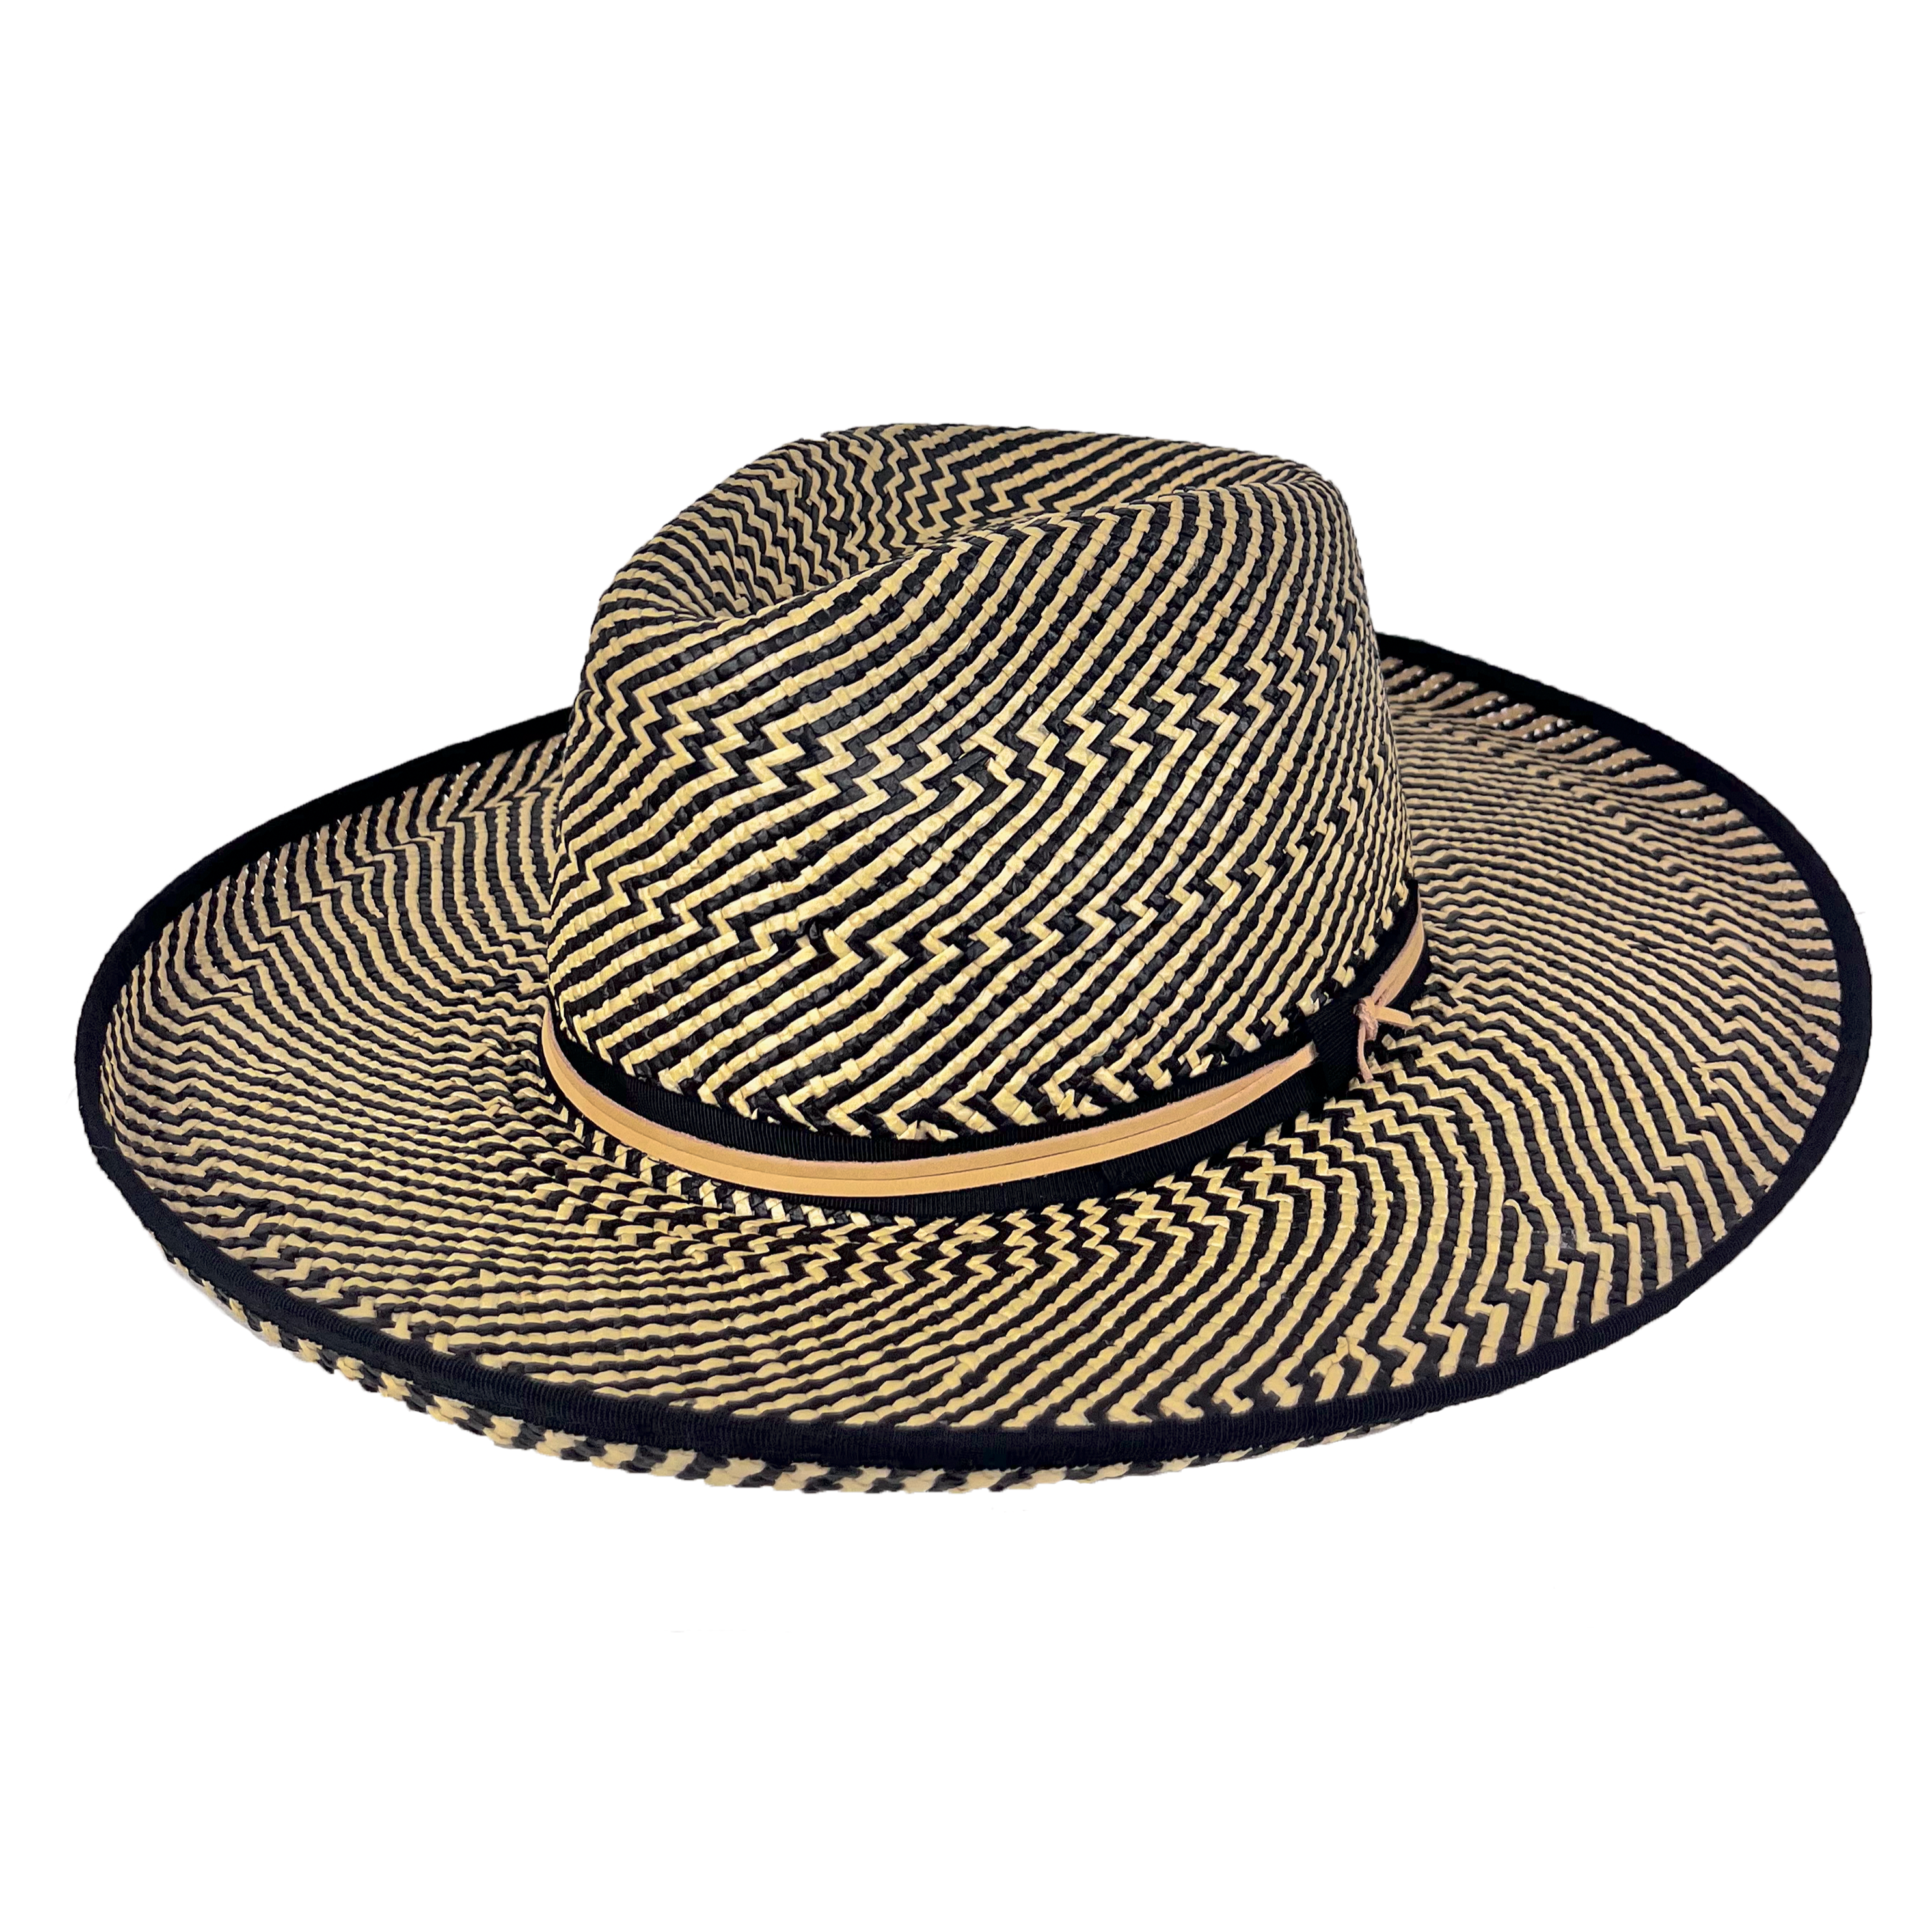 stylish galilee rancher straw hat in black/tan